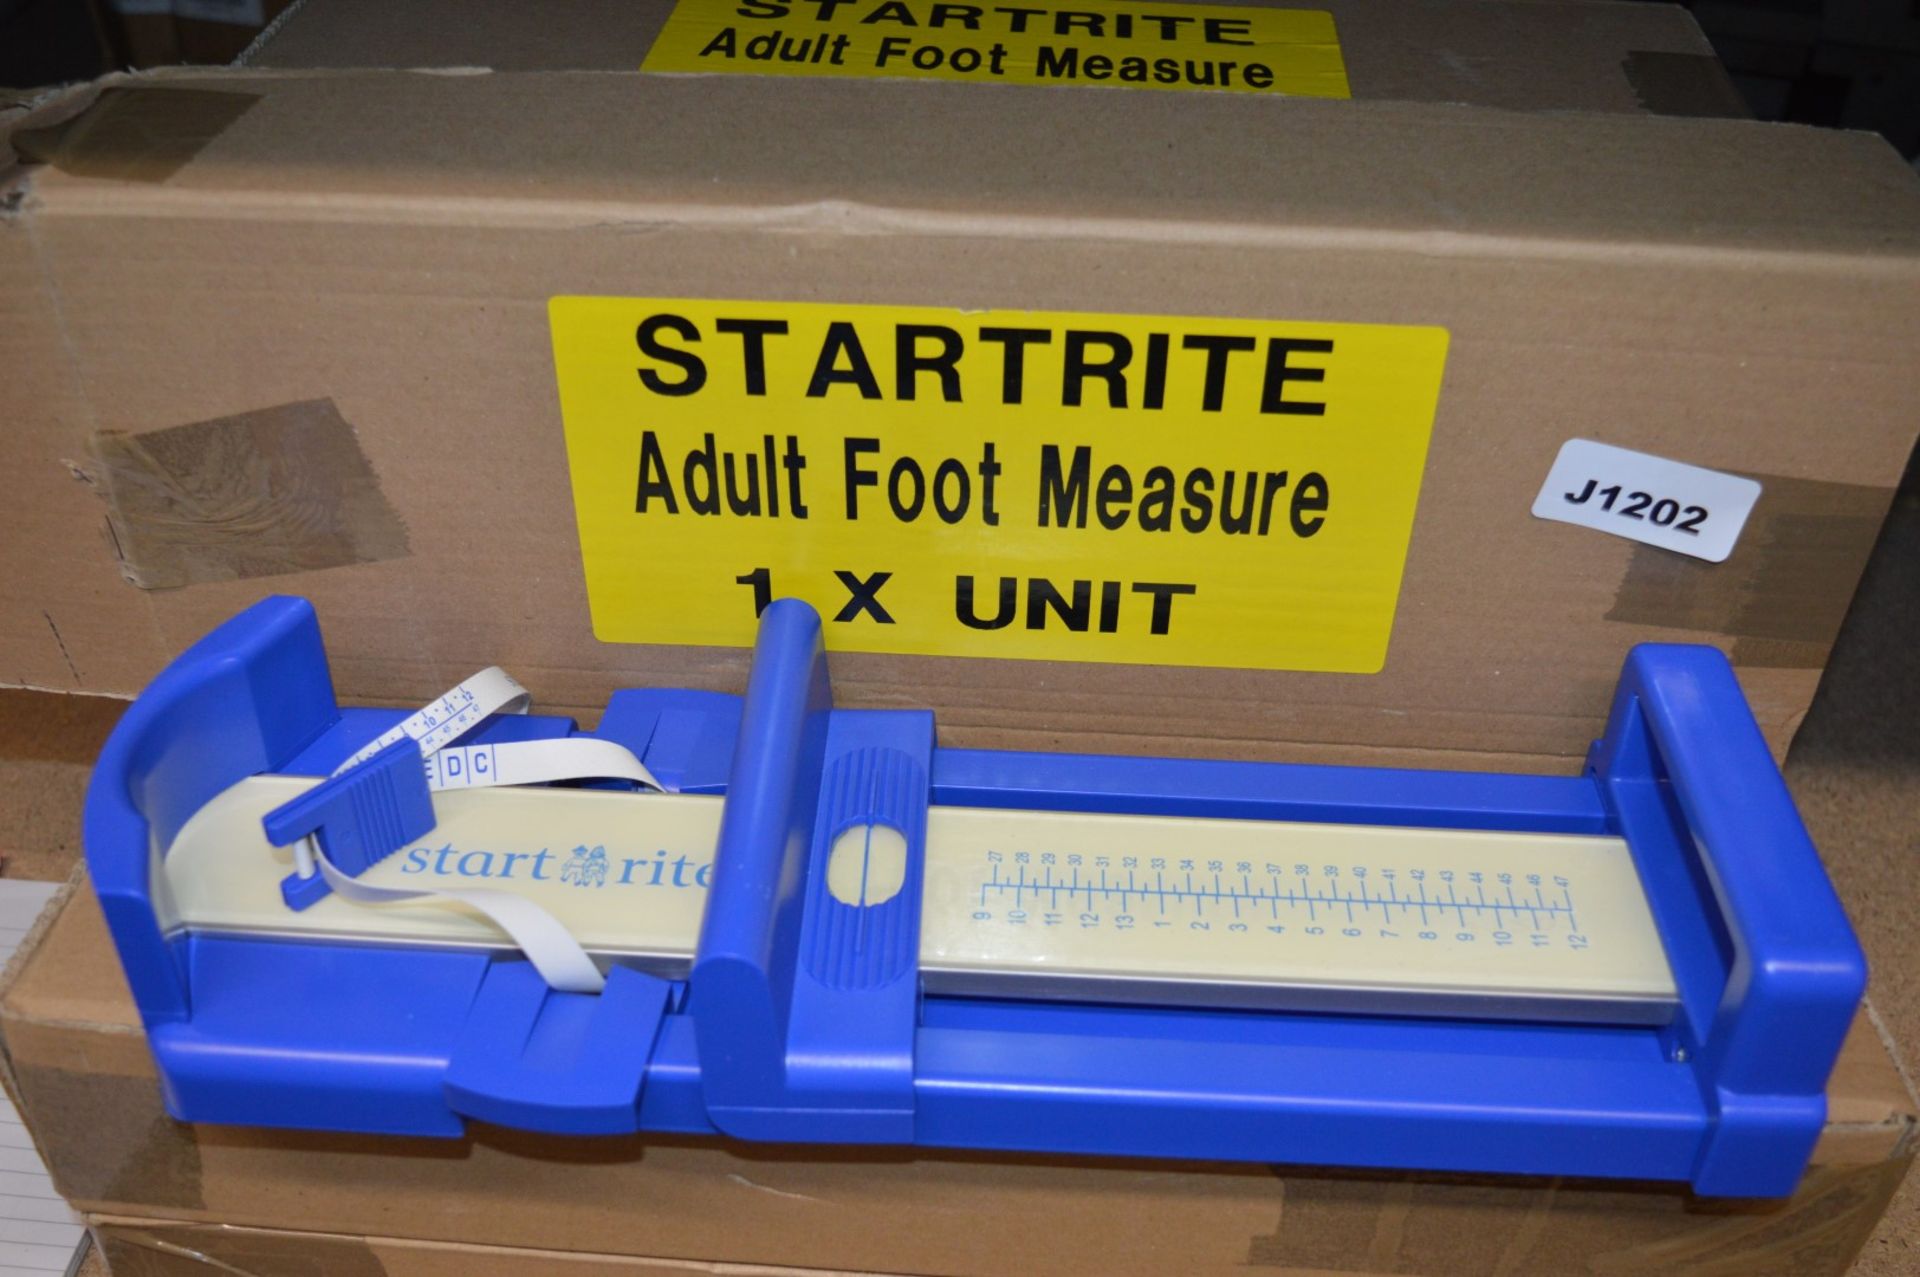 3 x Startrite Adult Foot Measures - Brand New - CL285 - Ref J1102 - Location: Altrincham WA14